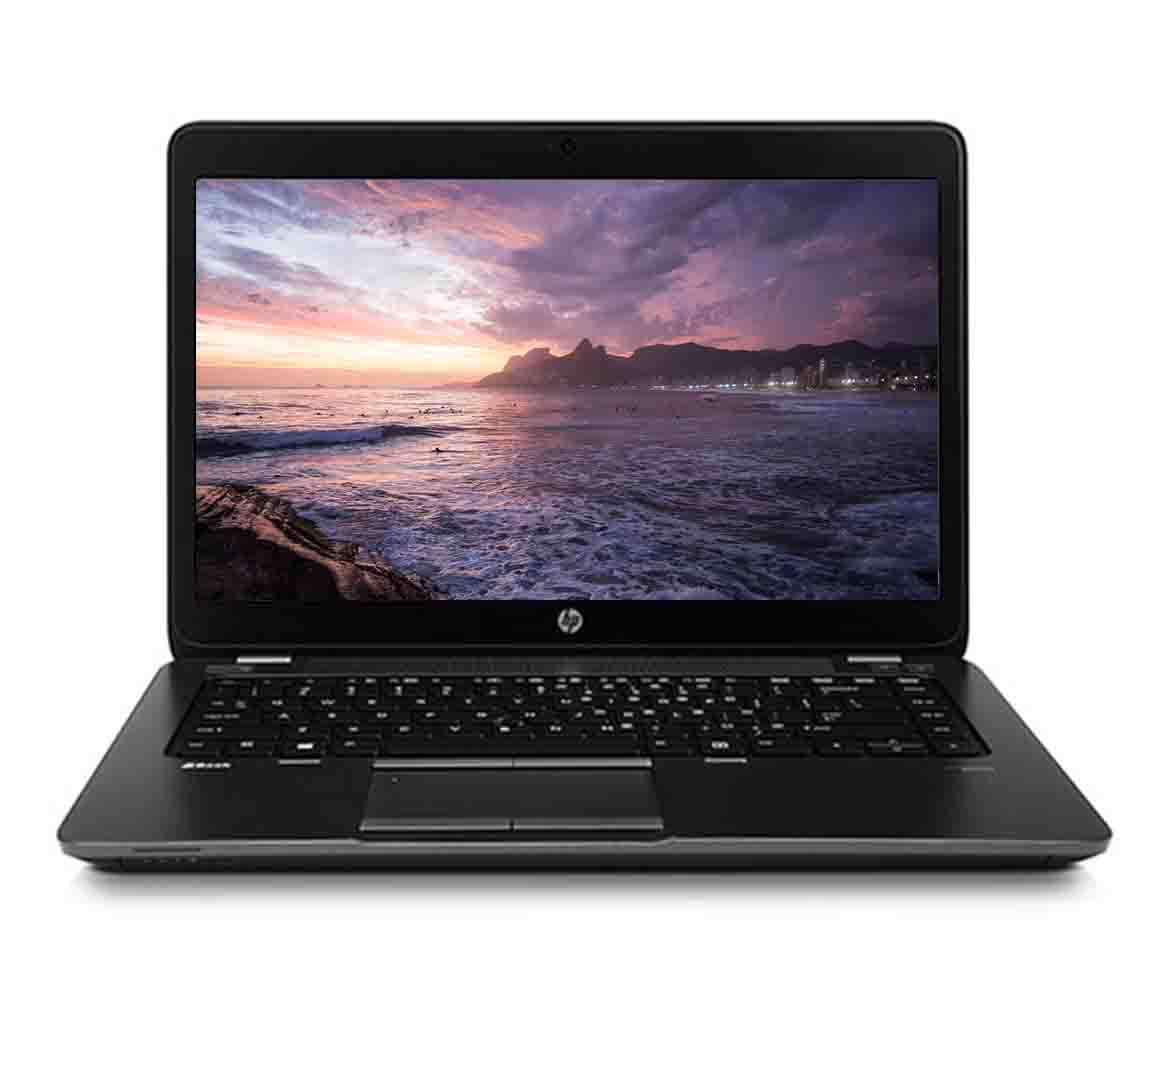 HP Zbook 14 G1, Intel Core i7-4th Gen. CPU, 8GB RAM, 256GB SSD, AMD FirePro M4100, 14.1 inch Display, Windows 10 PRO, Refurbished Laptop